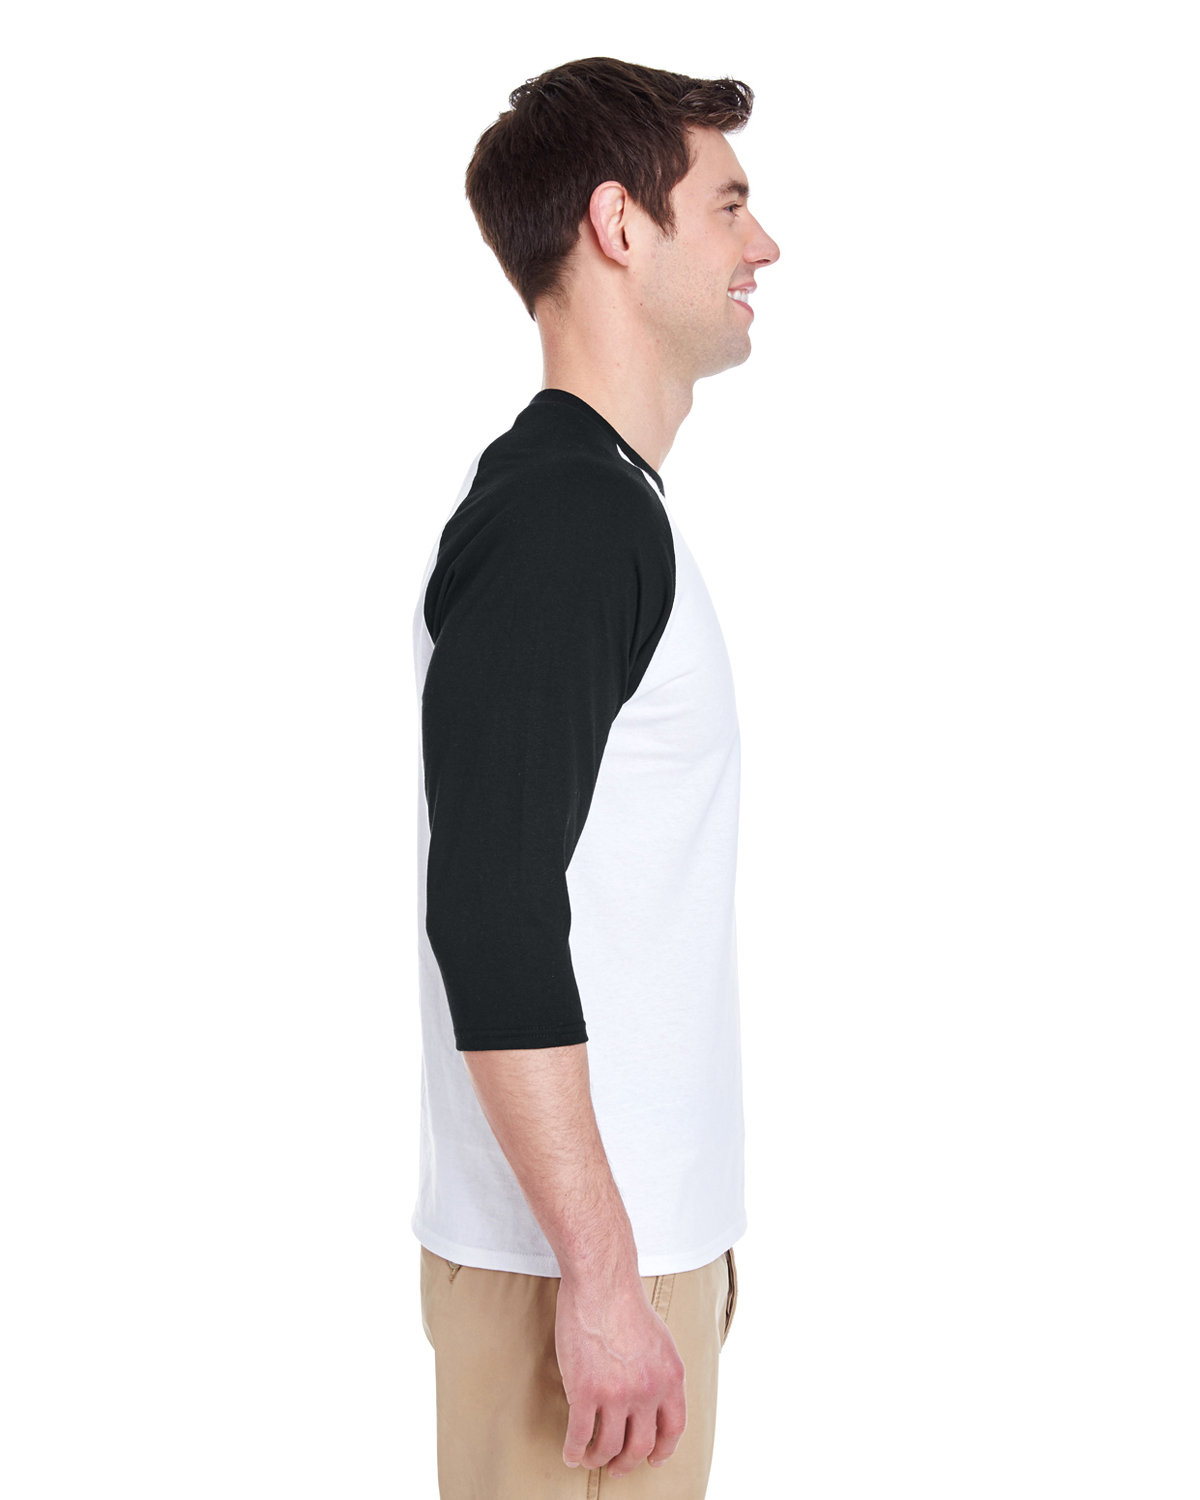 Gildan Adult Heavy Cotton™ Three-Quarter Raglan Sleeve T-Shirt